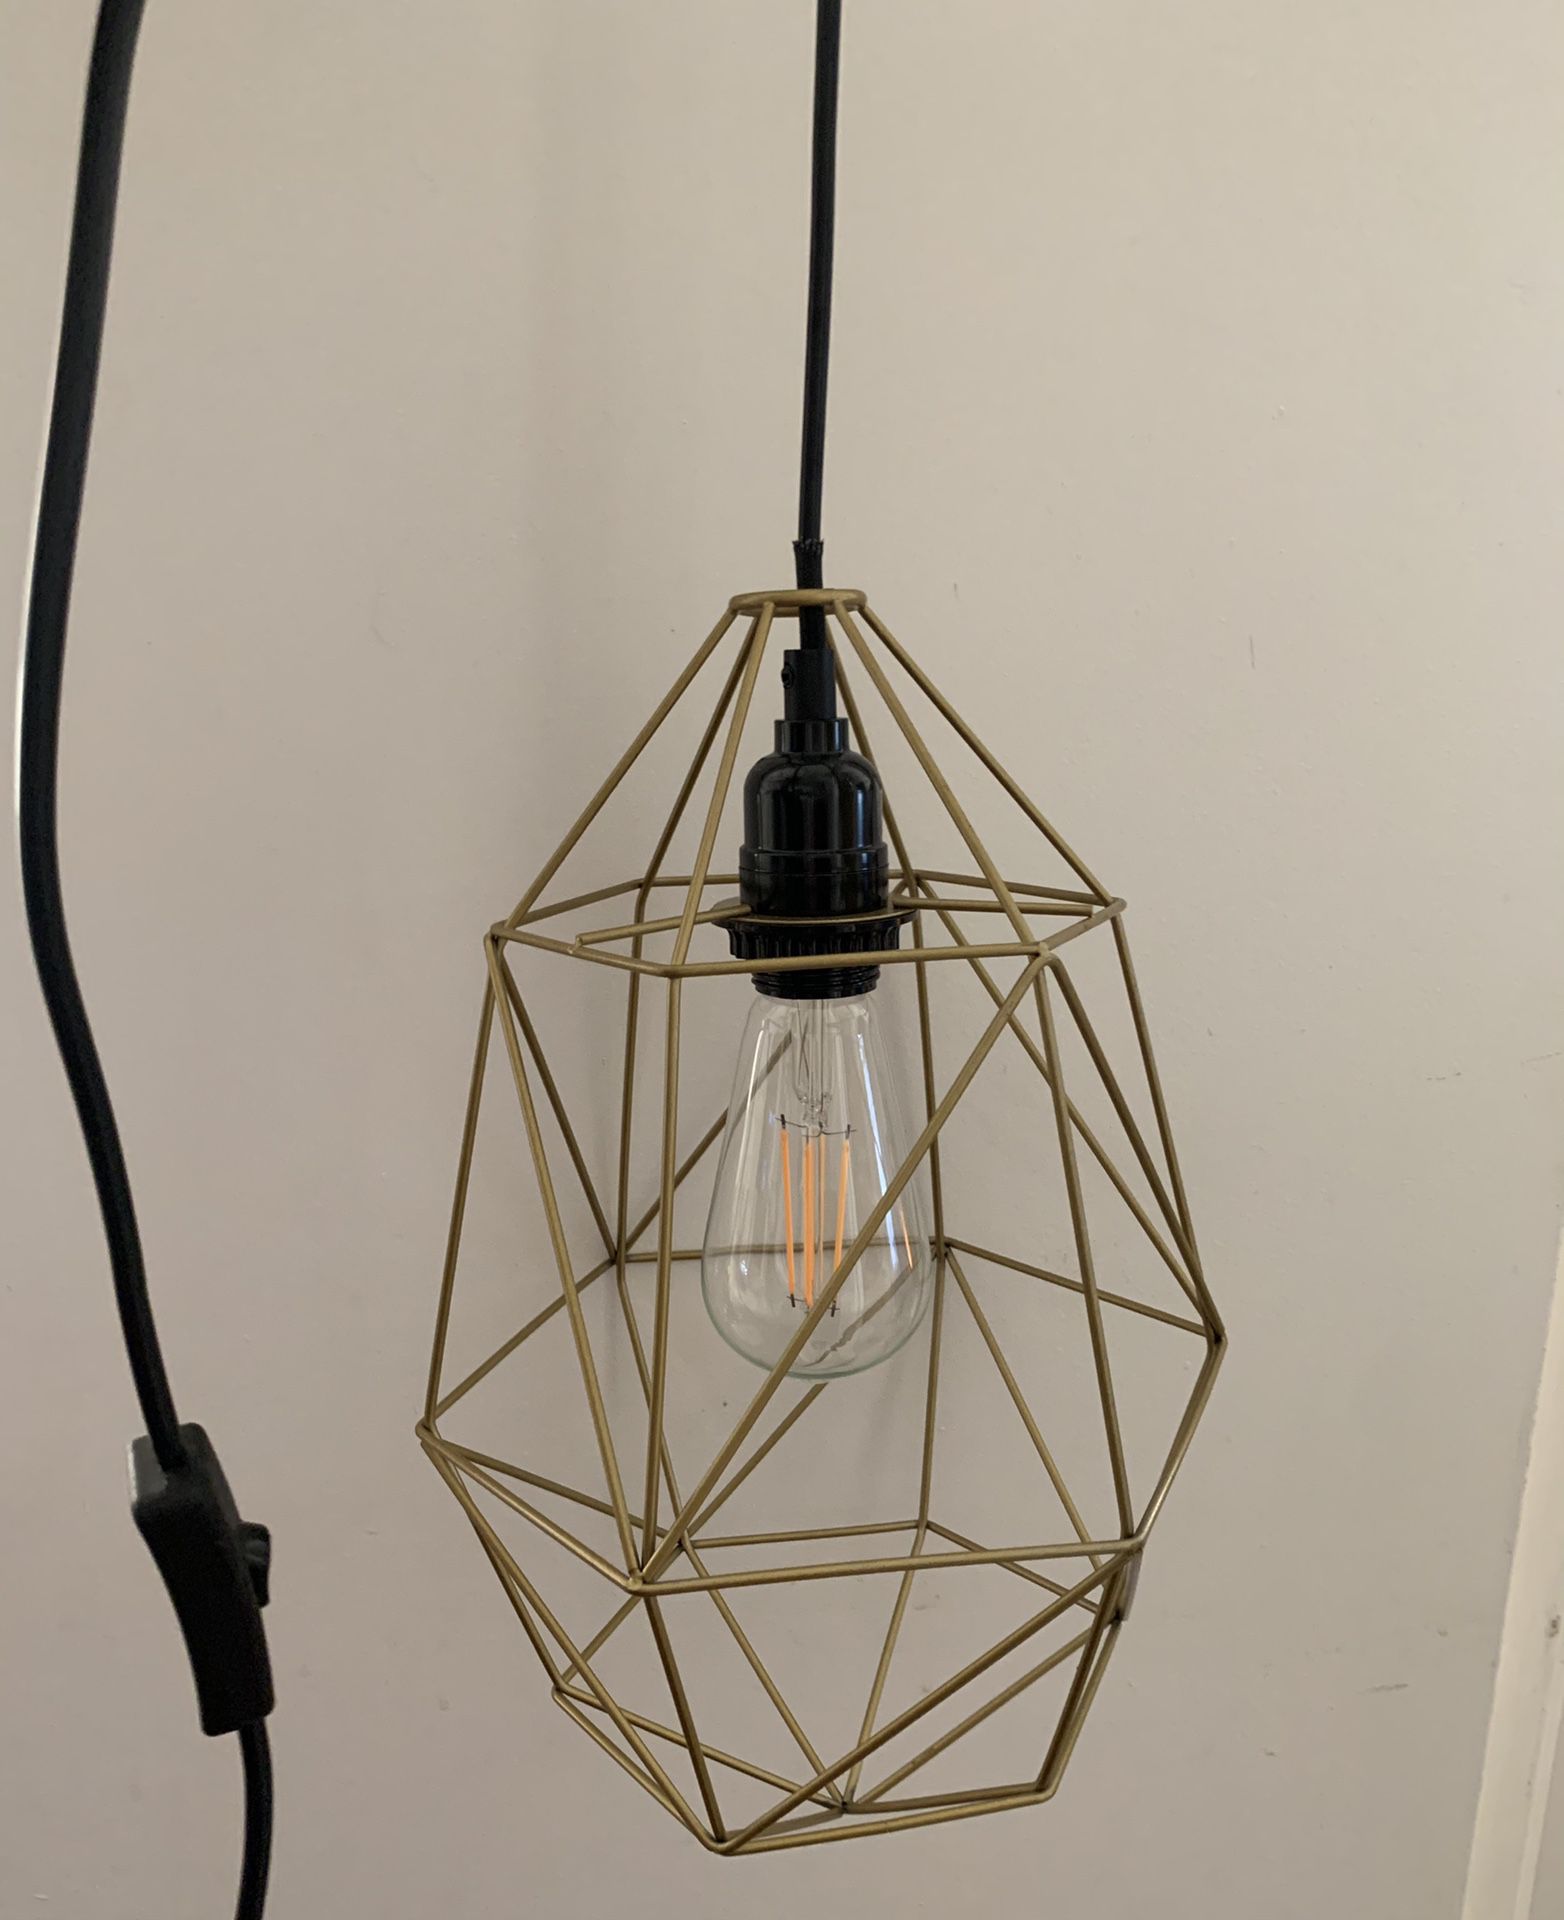 Hanging lamp, modern lamp, retro lamp with bulb